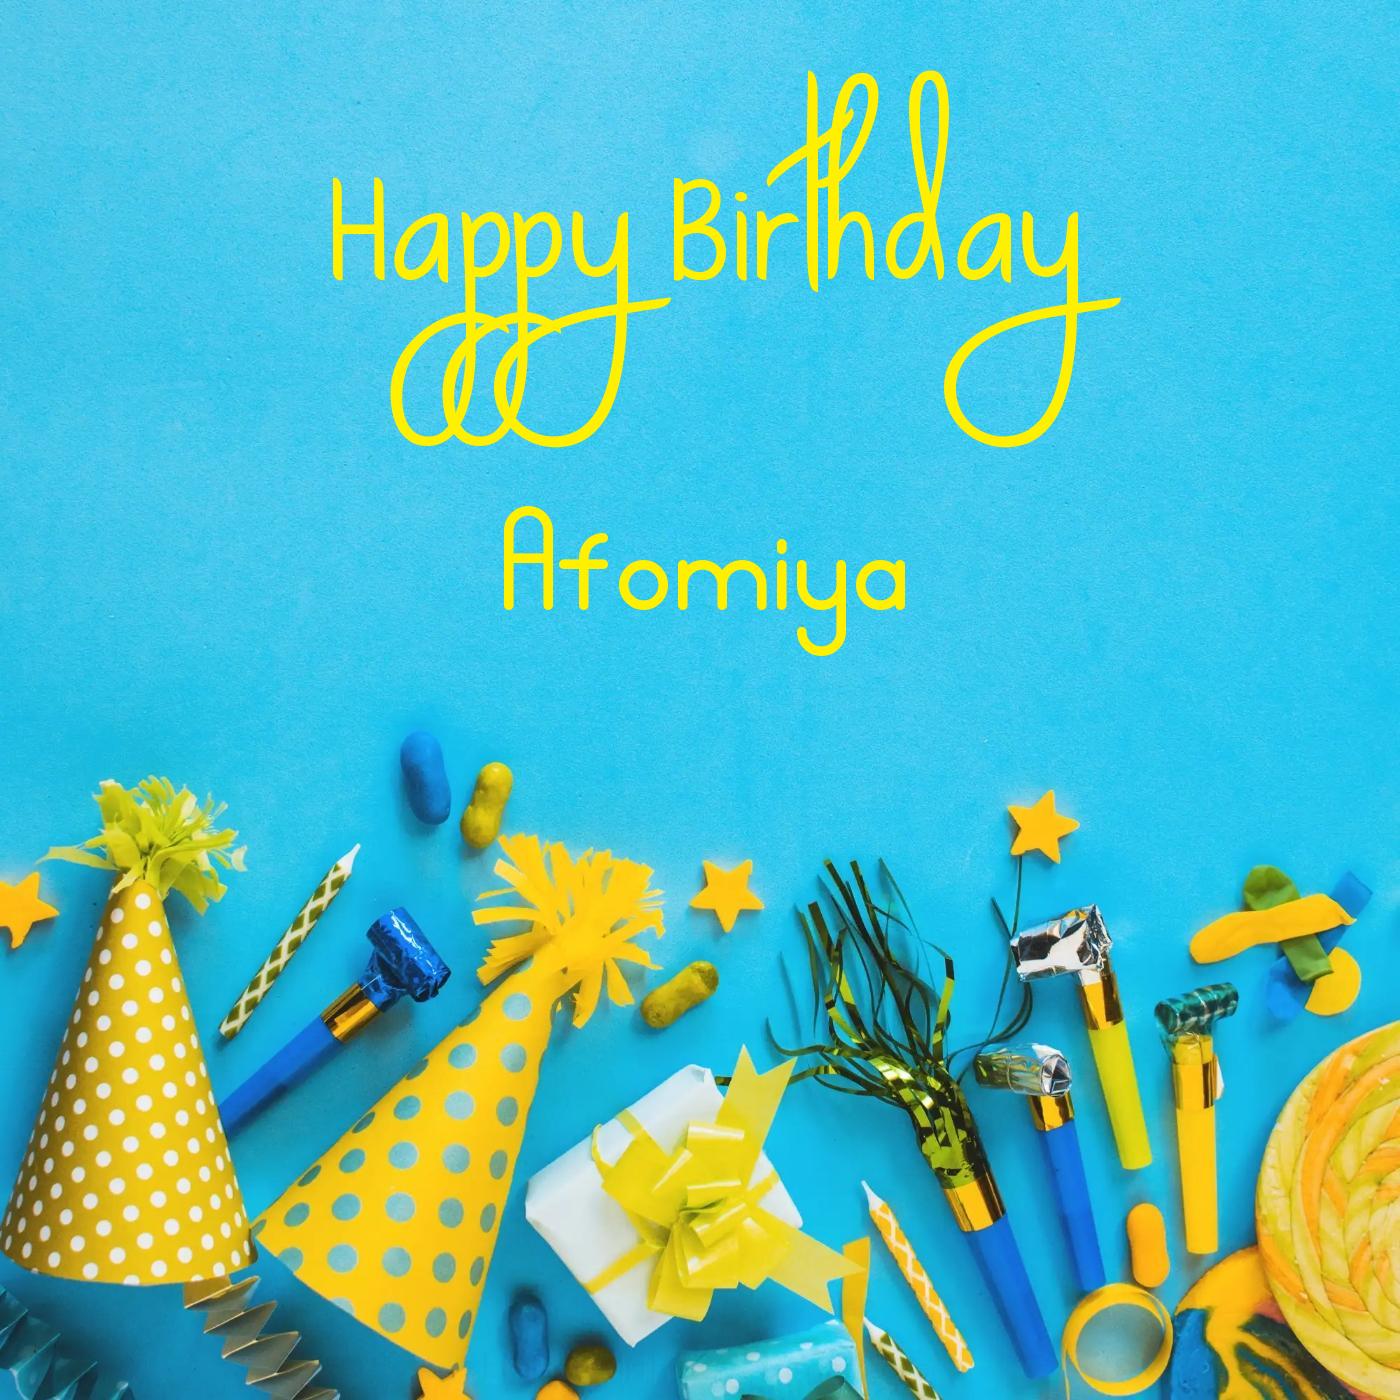 Happy Birthday Afomiya Party Accessories Card